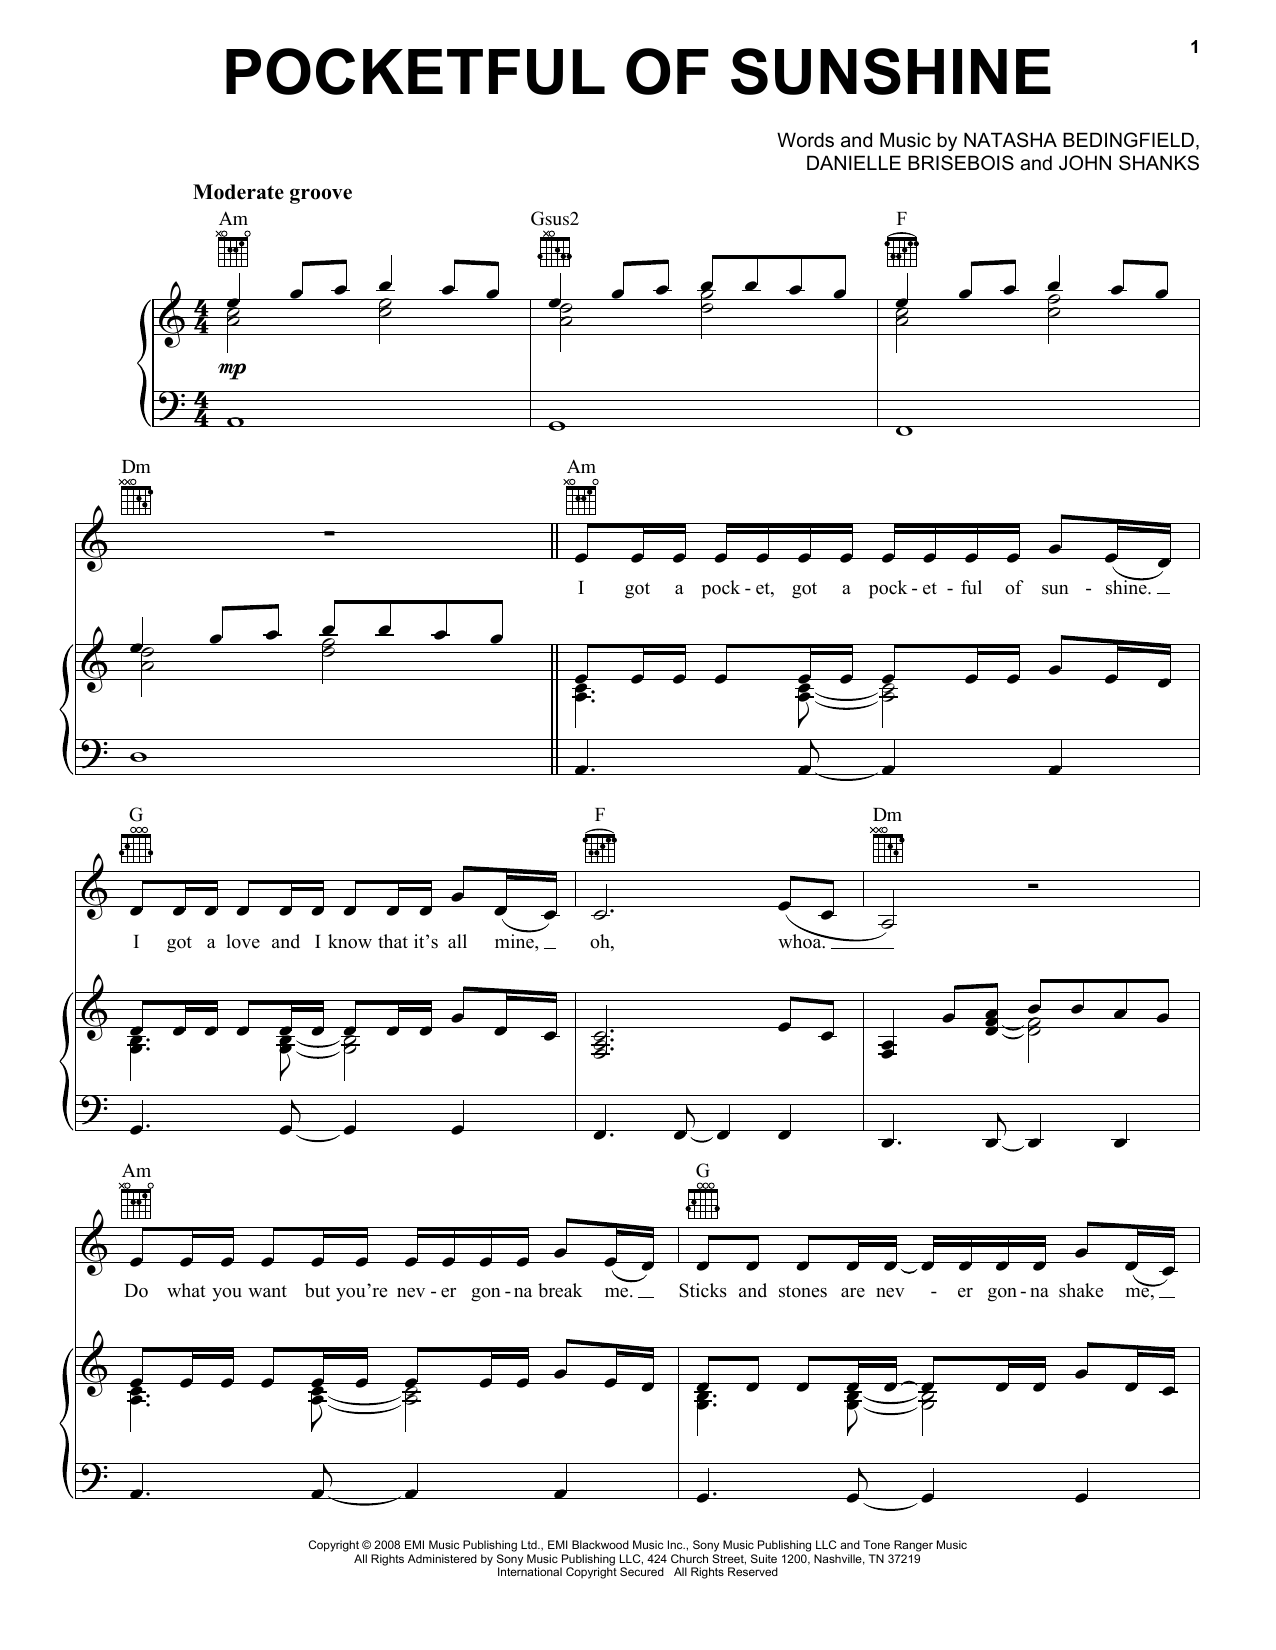 Download Natasha Bedingfield Pocketful Of Sunshine Sheet Music and learn how to play Easy Guitar Tab PDF digital score in minutes